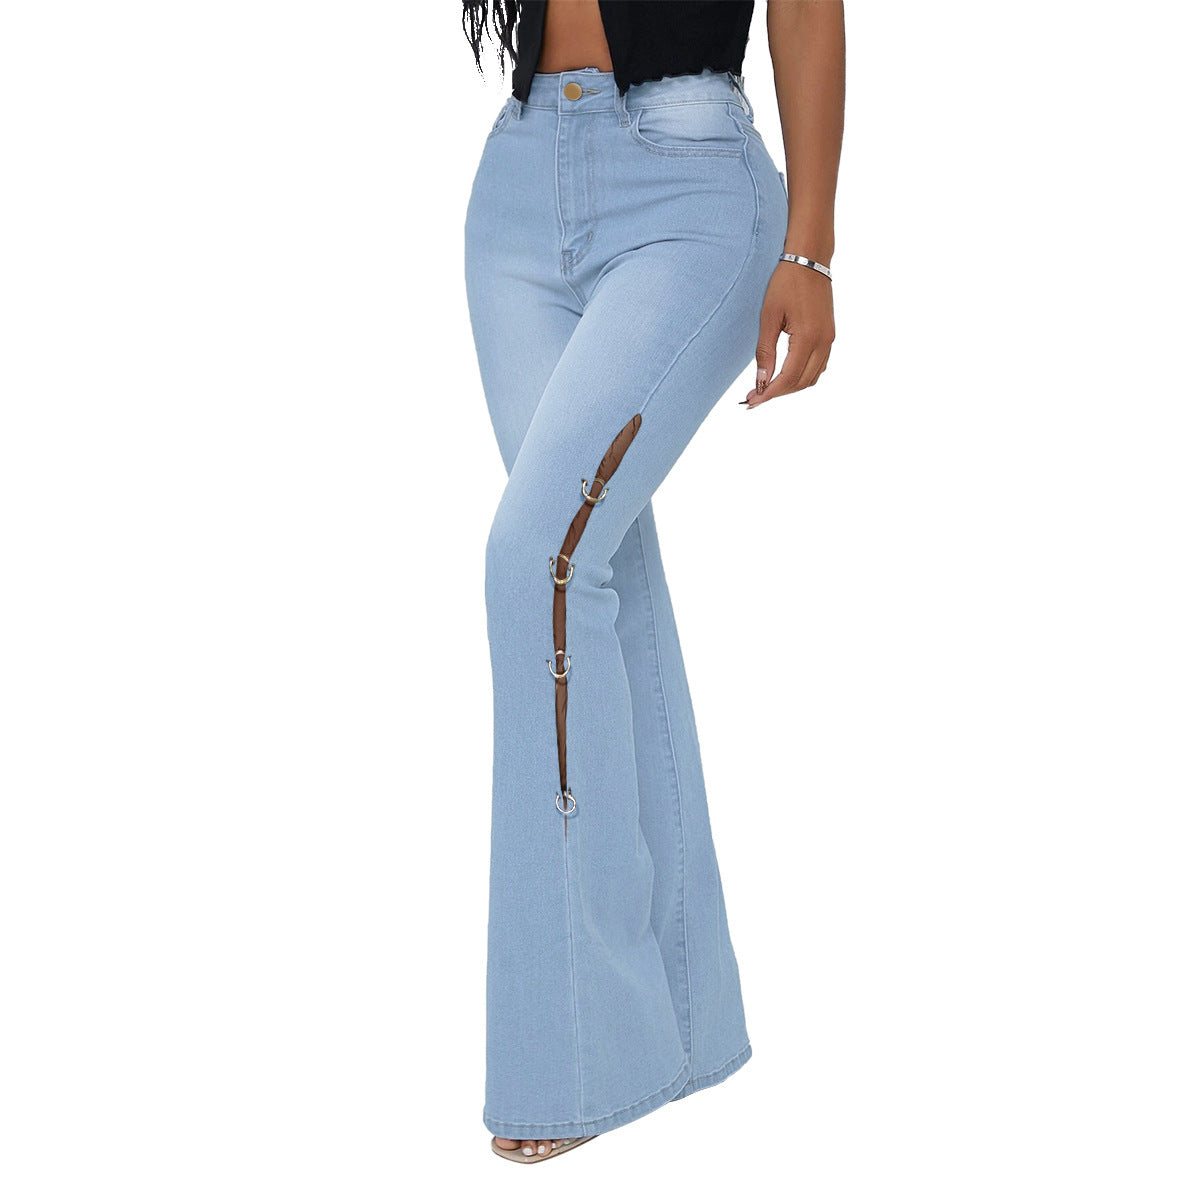 Fashion Metal Denim Women Trumpet Jeans-Pants-Light Blue-S-Free Shipping Leatheretro